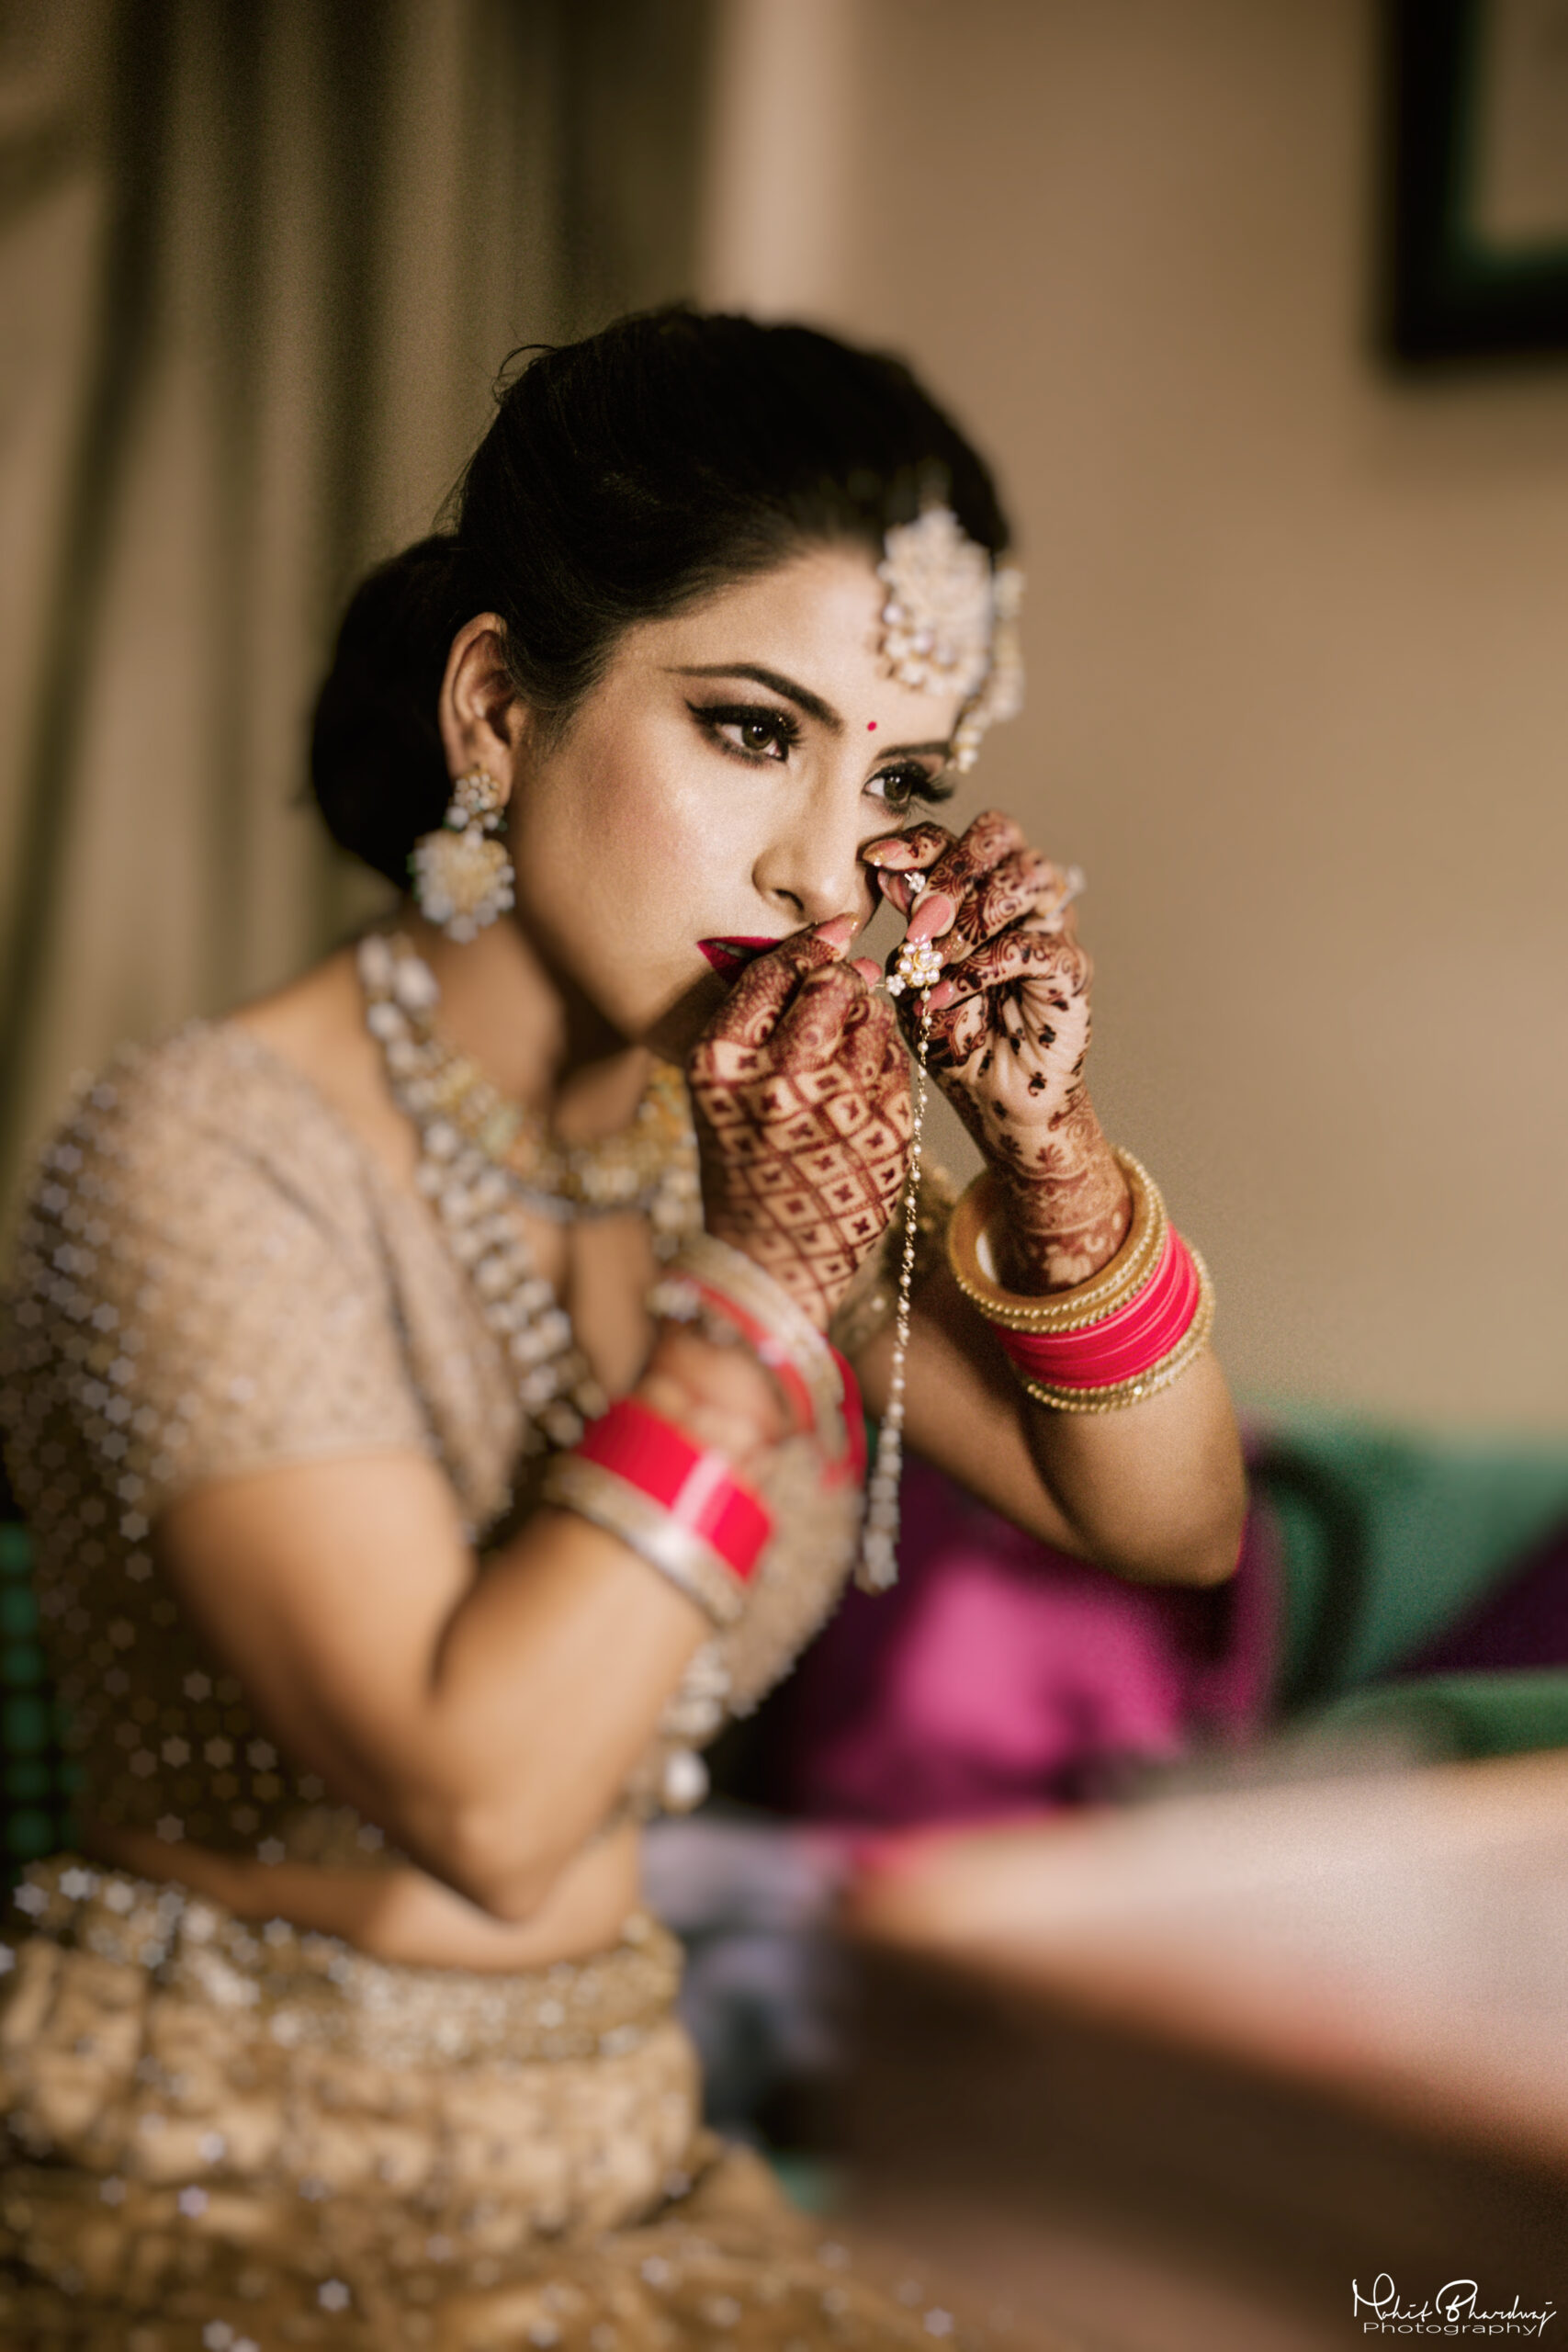 Pin by Sharigovind on महिलाओं के लिए फ़ैशन | Indian wedding photography  poses, Indian wedding poses, Indian bride photography poses